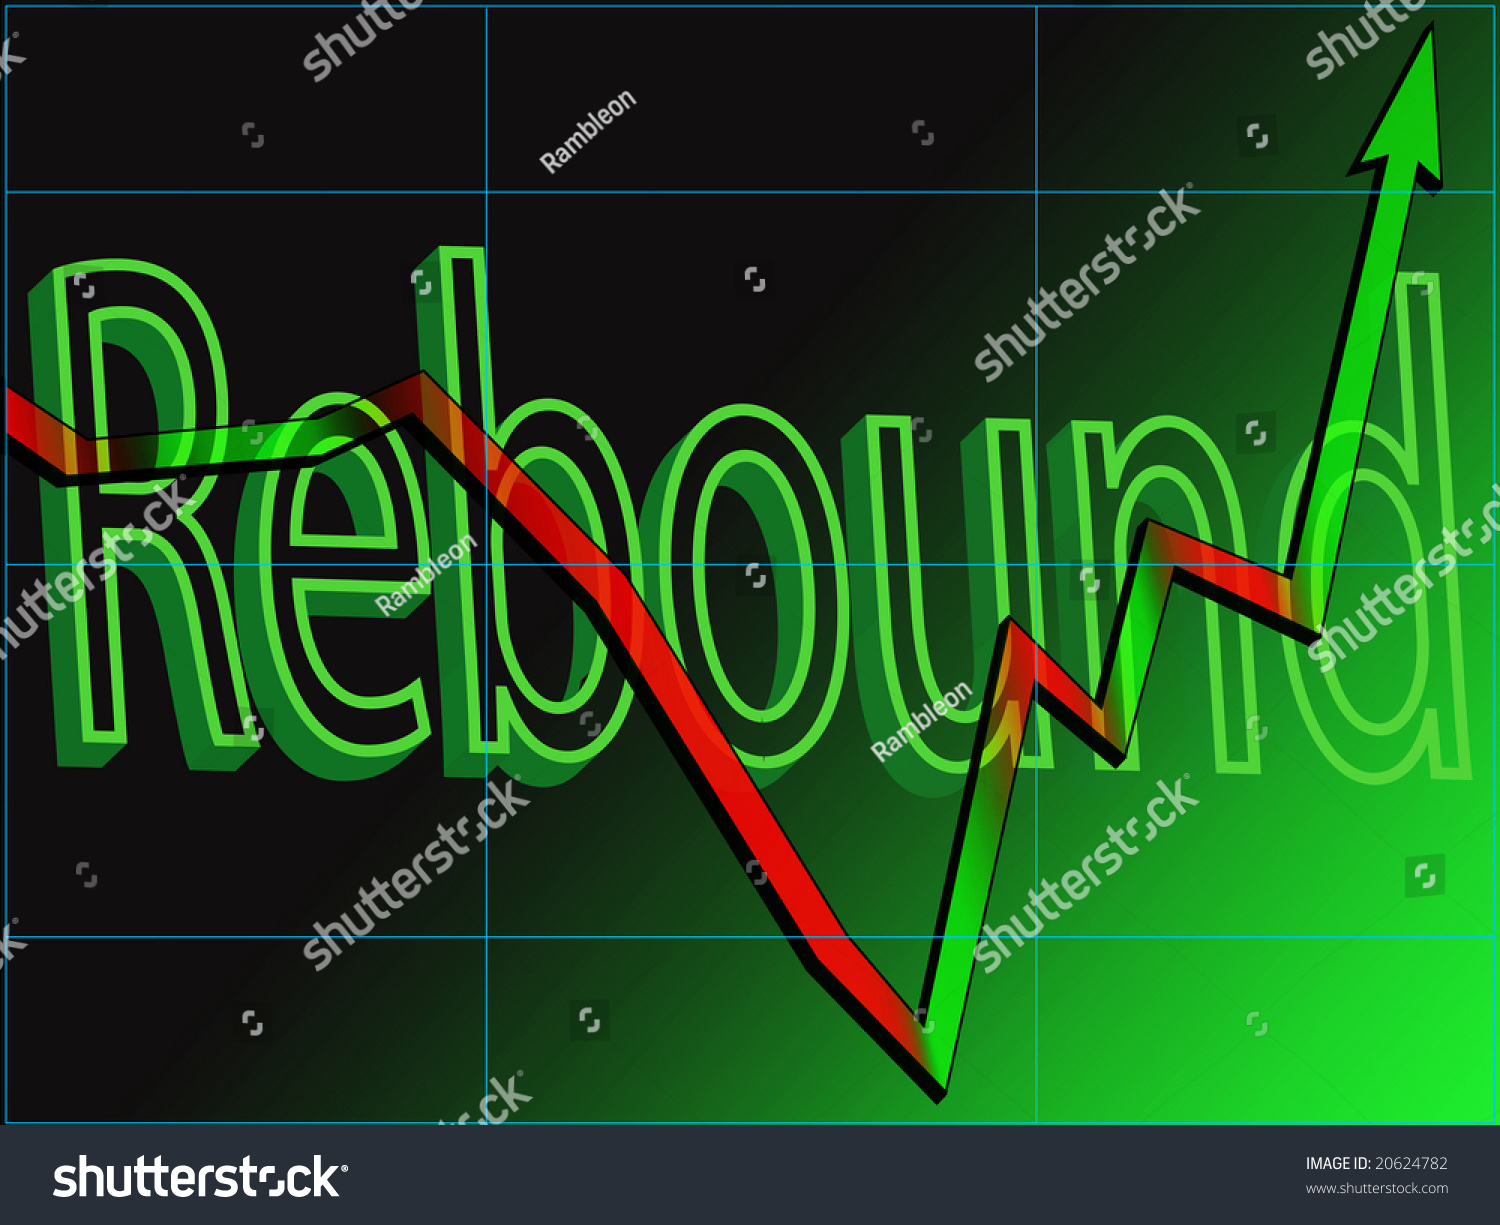 stock market to rebound